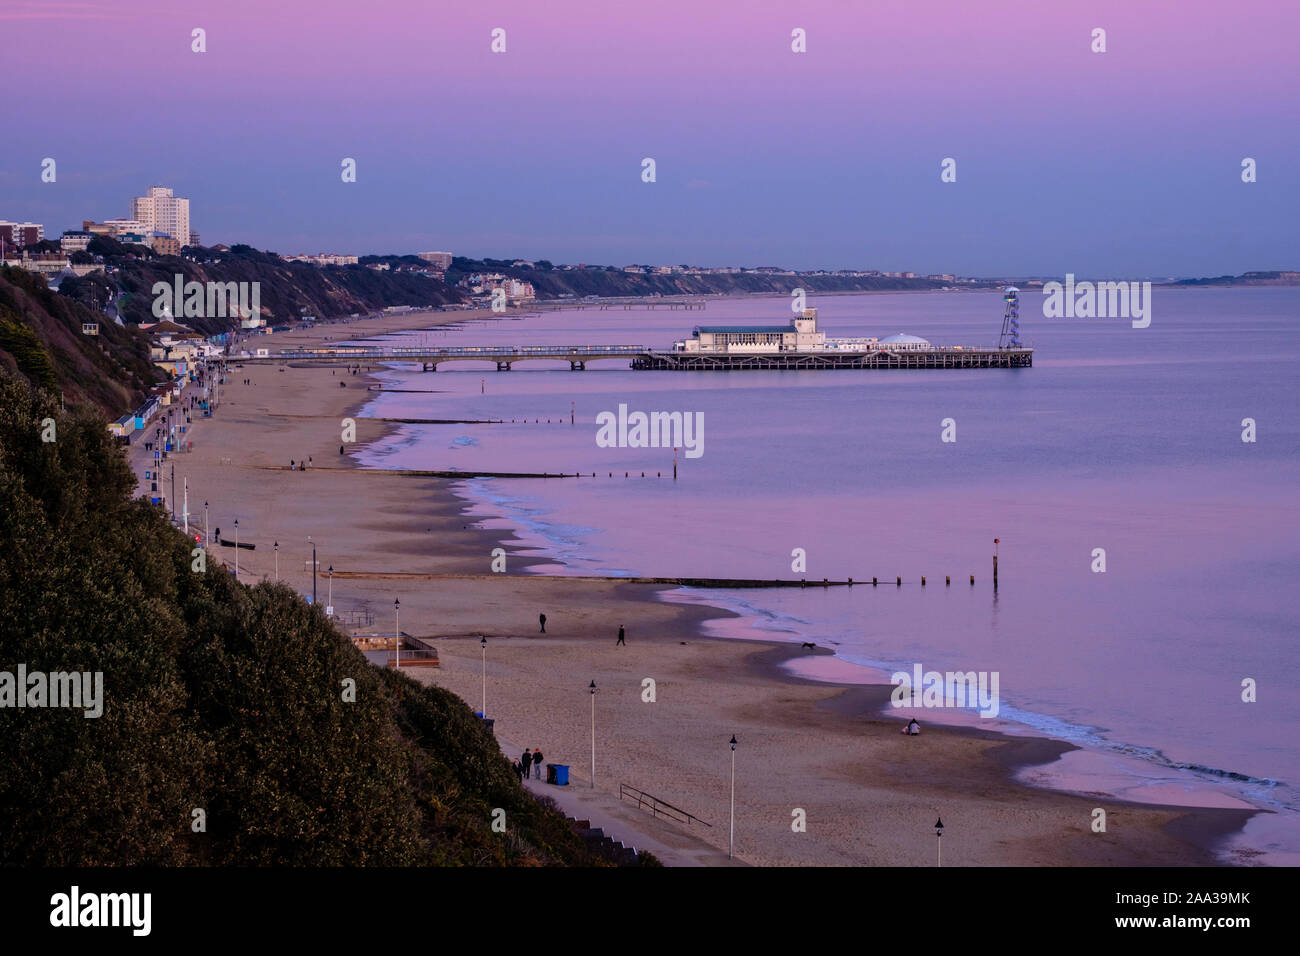 Bournemouth Pier, Beach and Promenade at Dusk, Poole Bay, Dorset, England, UK. Stock Photo